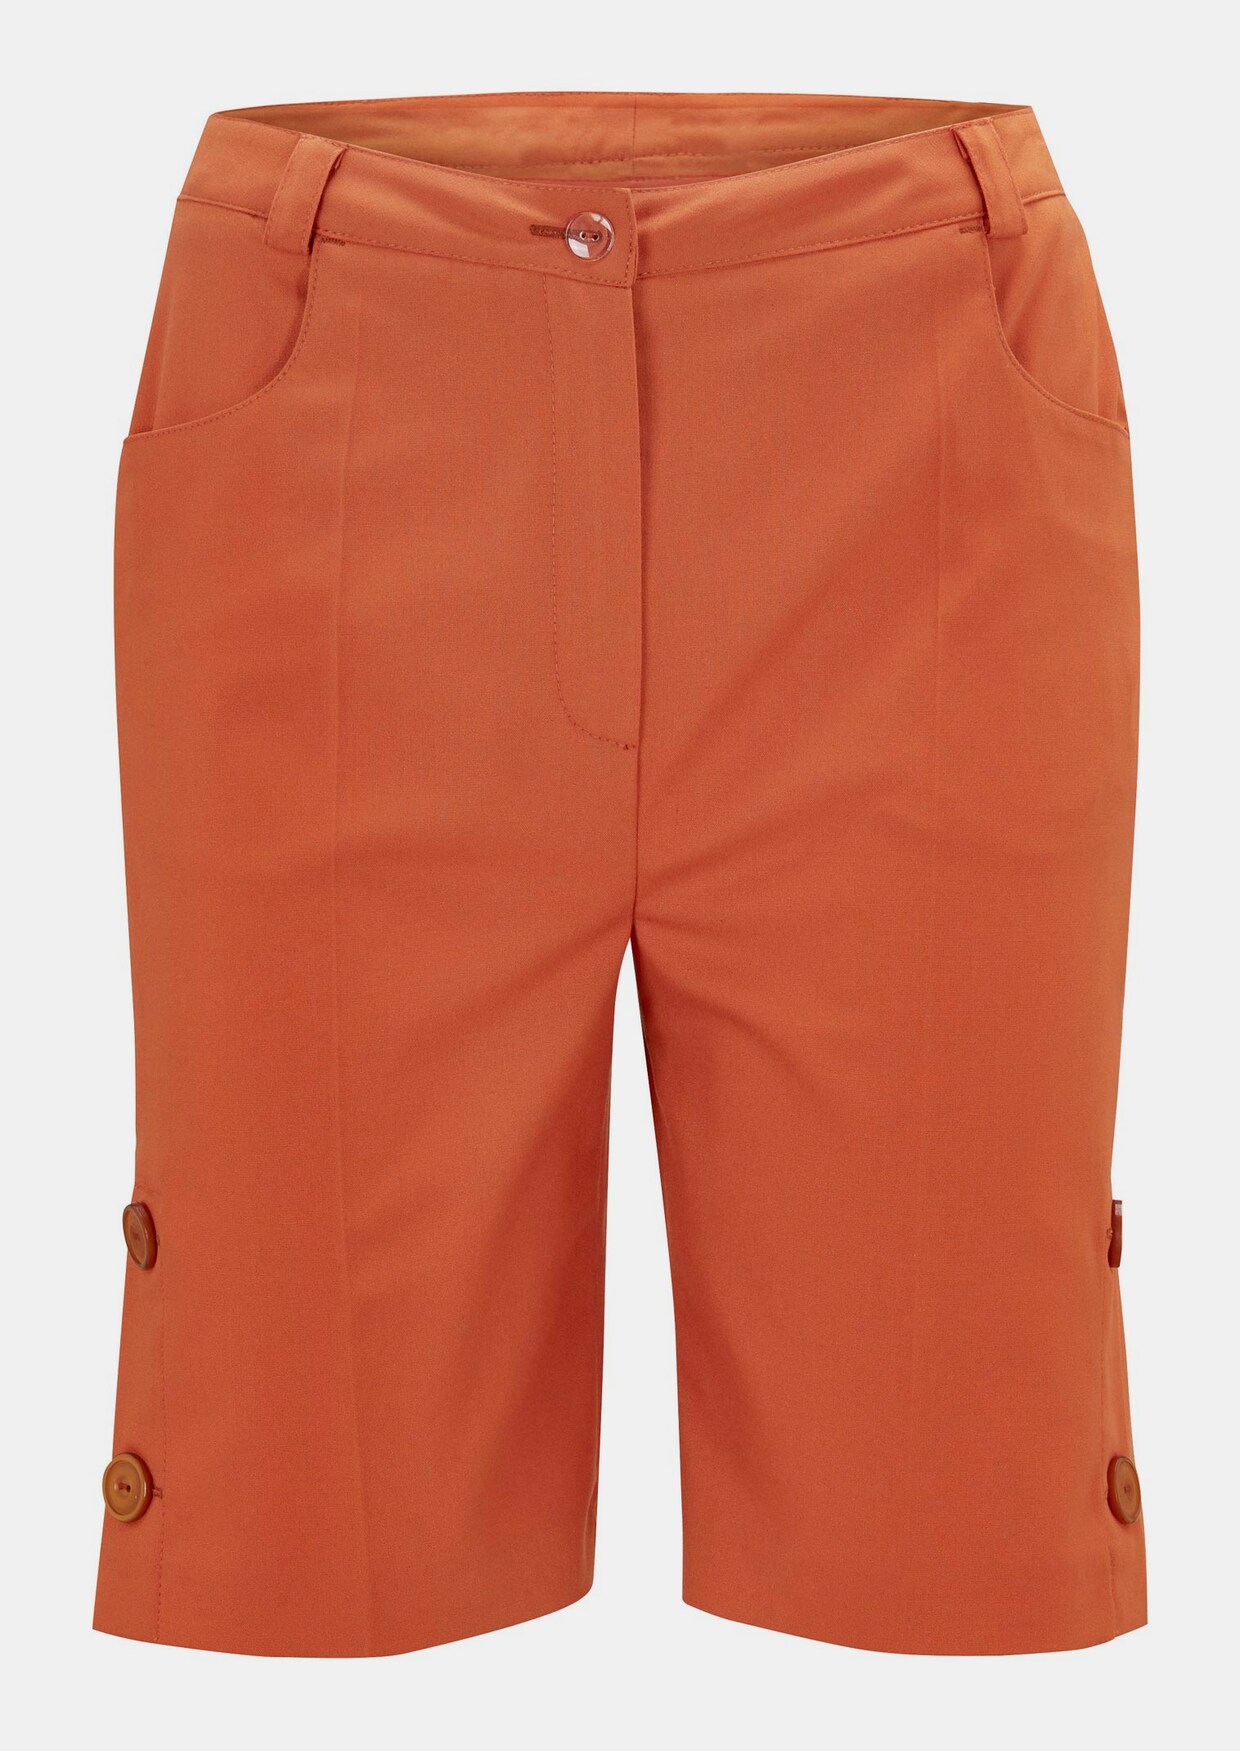 Rick Cardona Shorts - orange